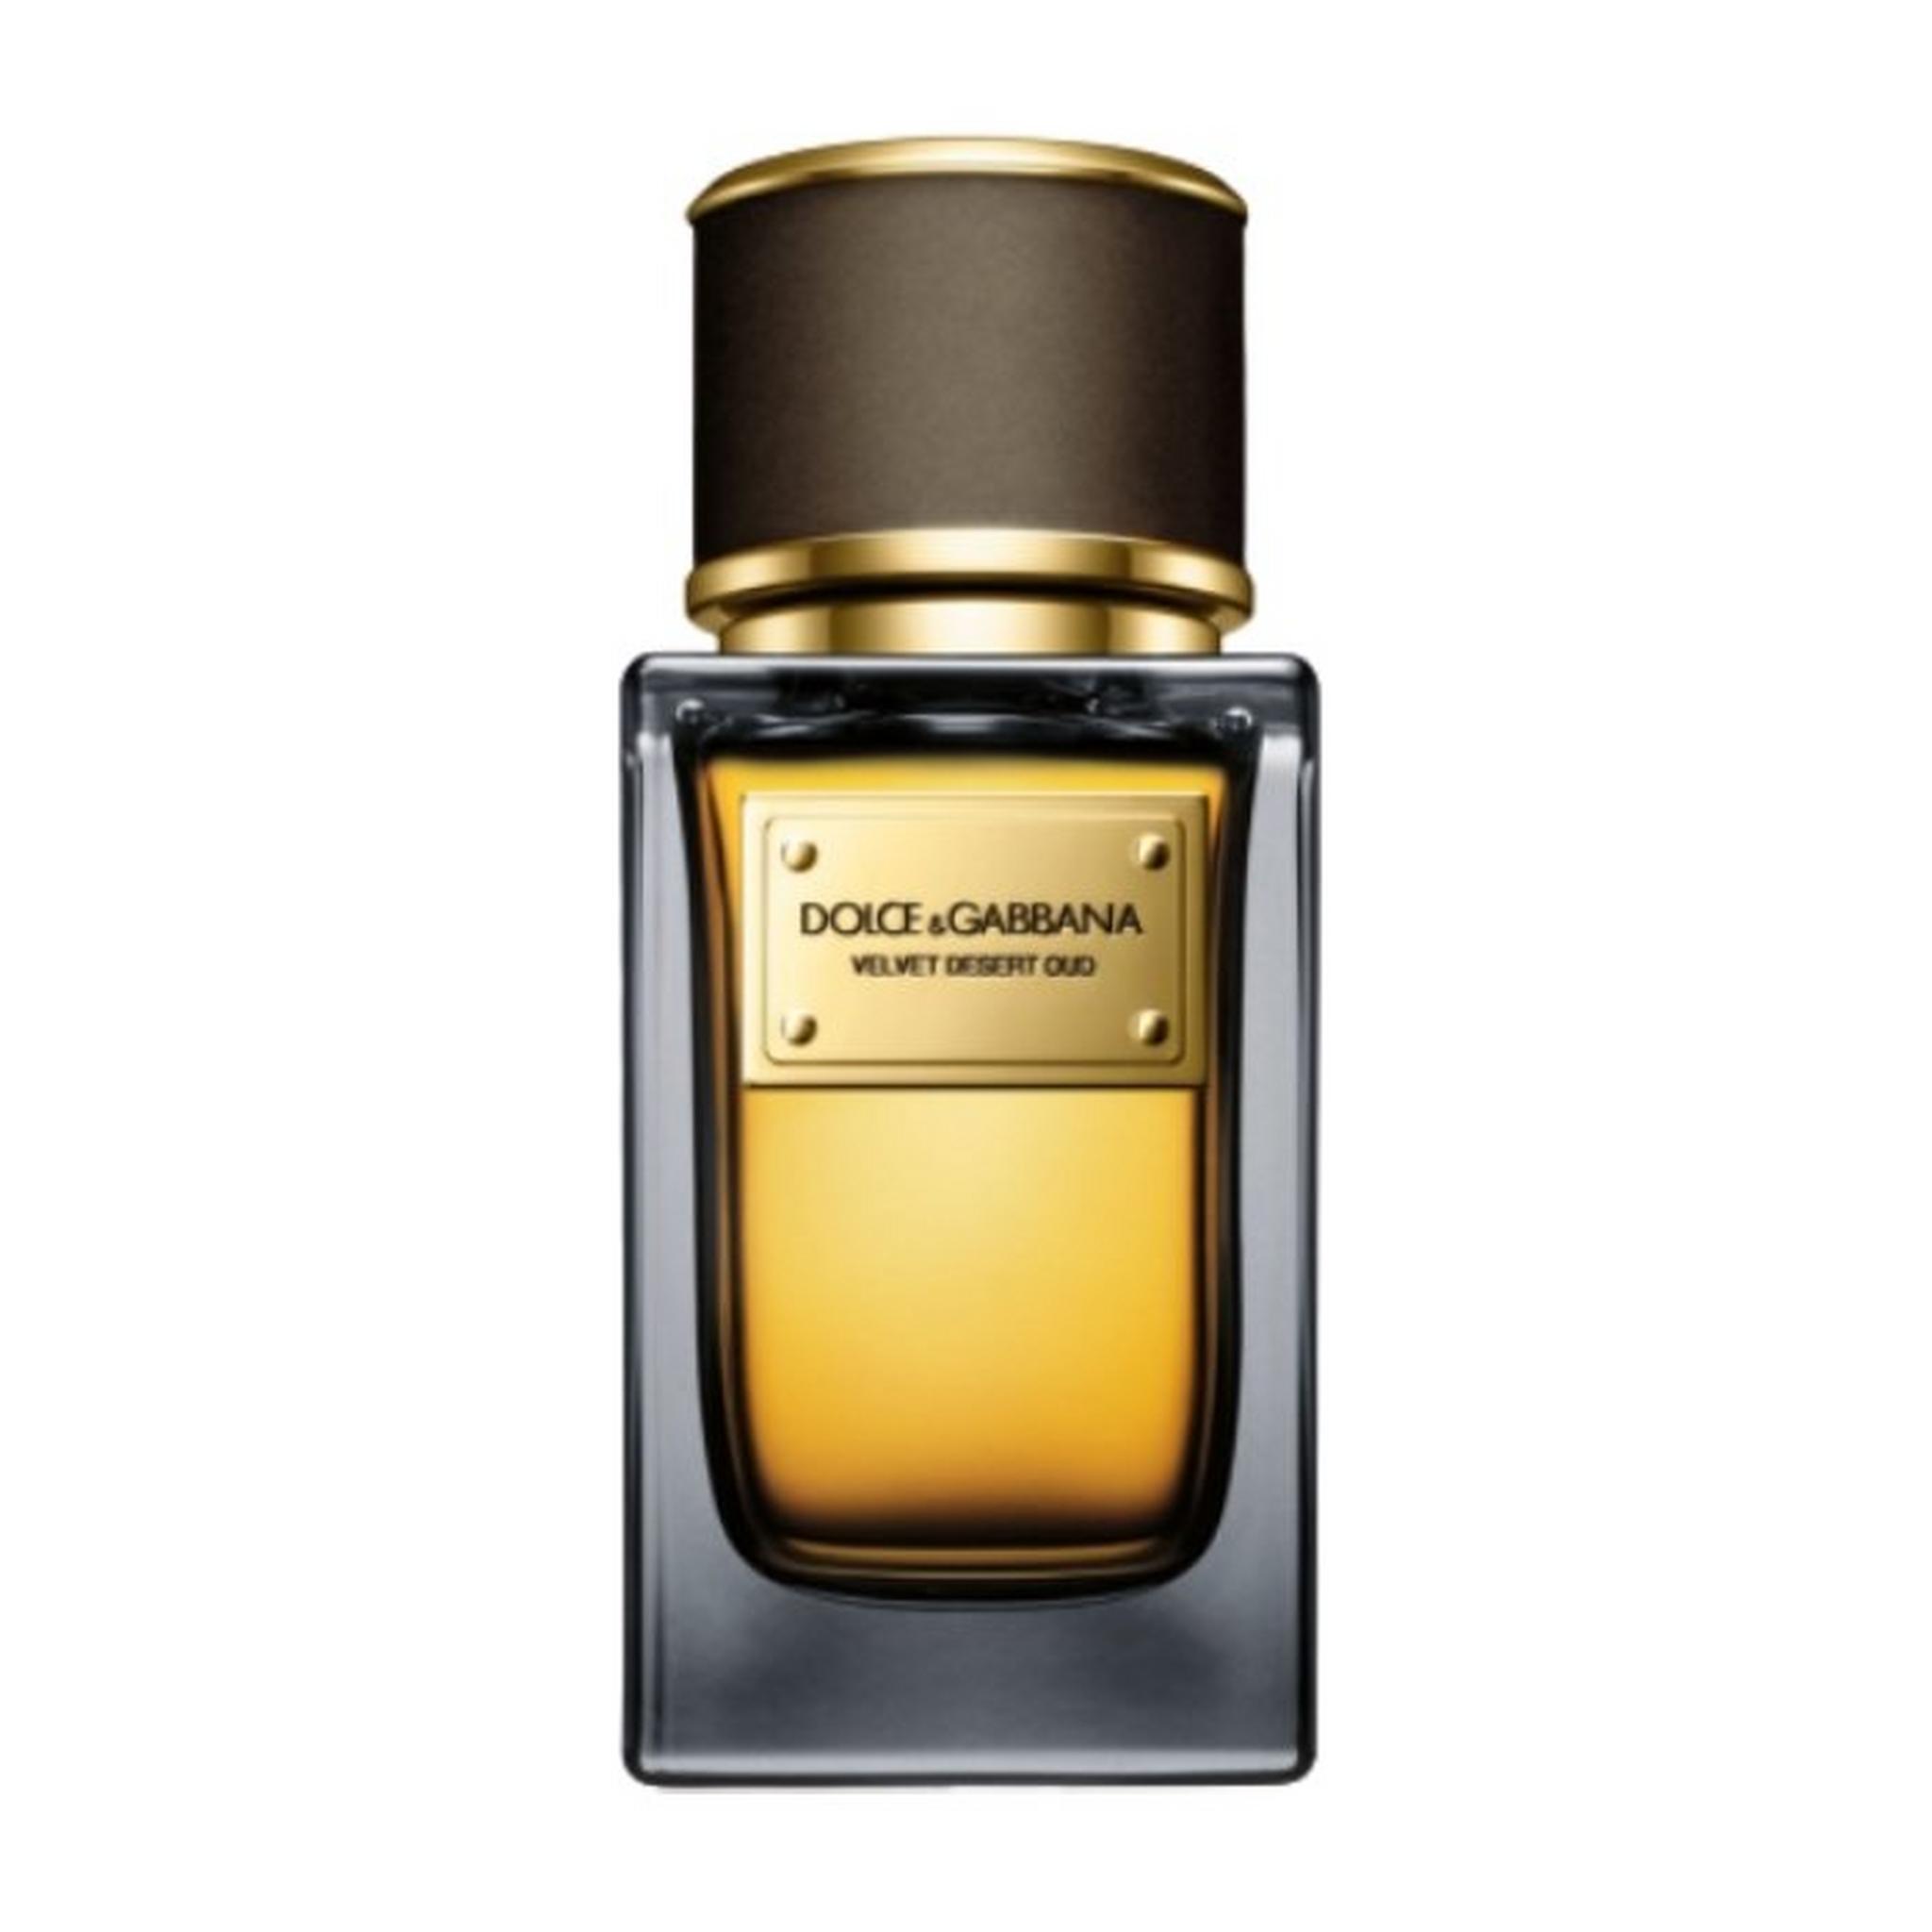 Velvet Desert Oud by Dolce & Gabbana for Women Eau de Parfum 50 ML.